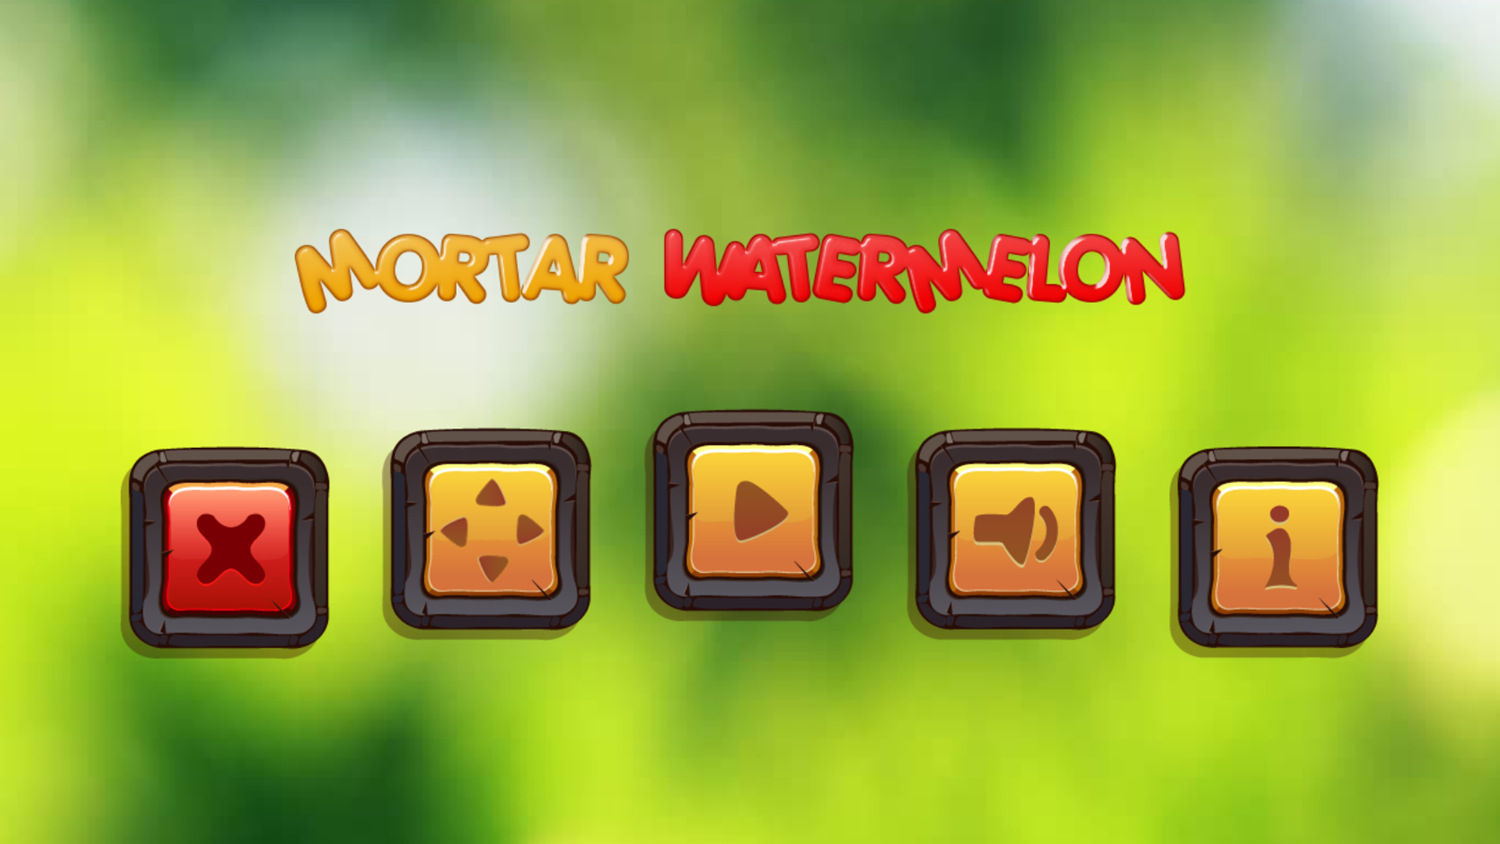 Mortar Watermelon Game Welcome Screen Screenshot.